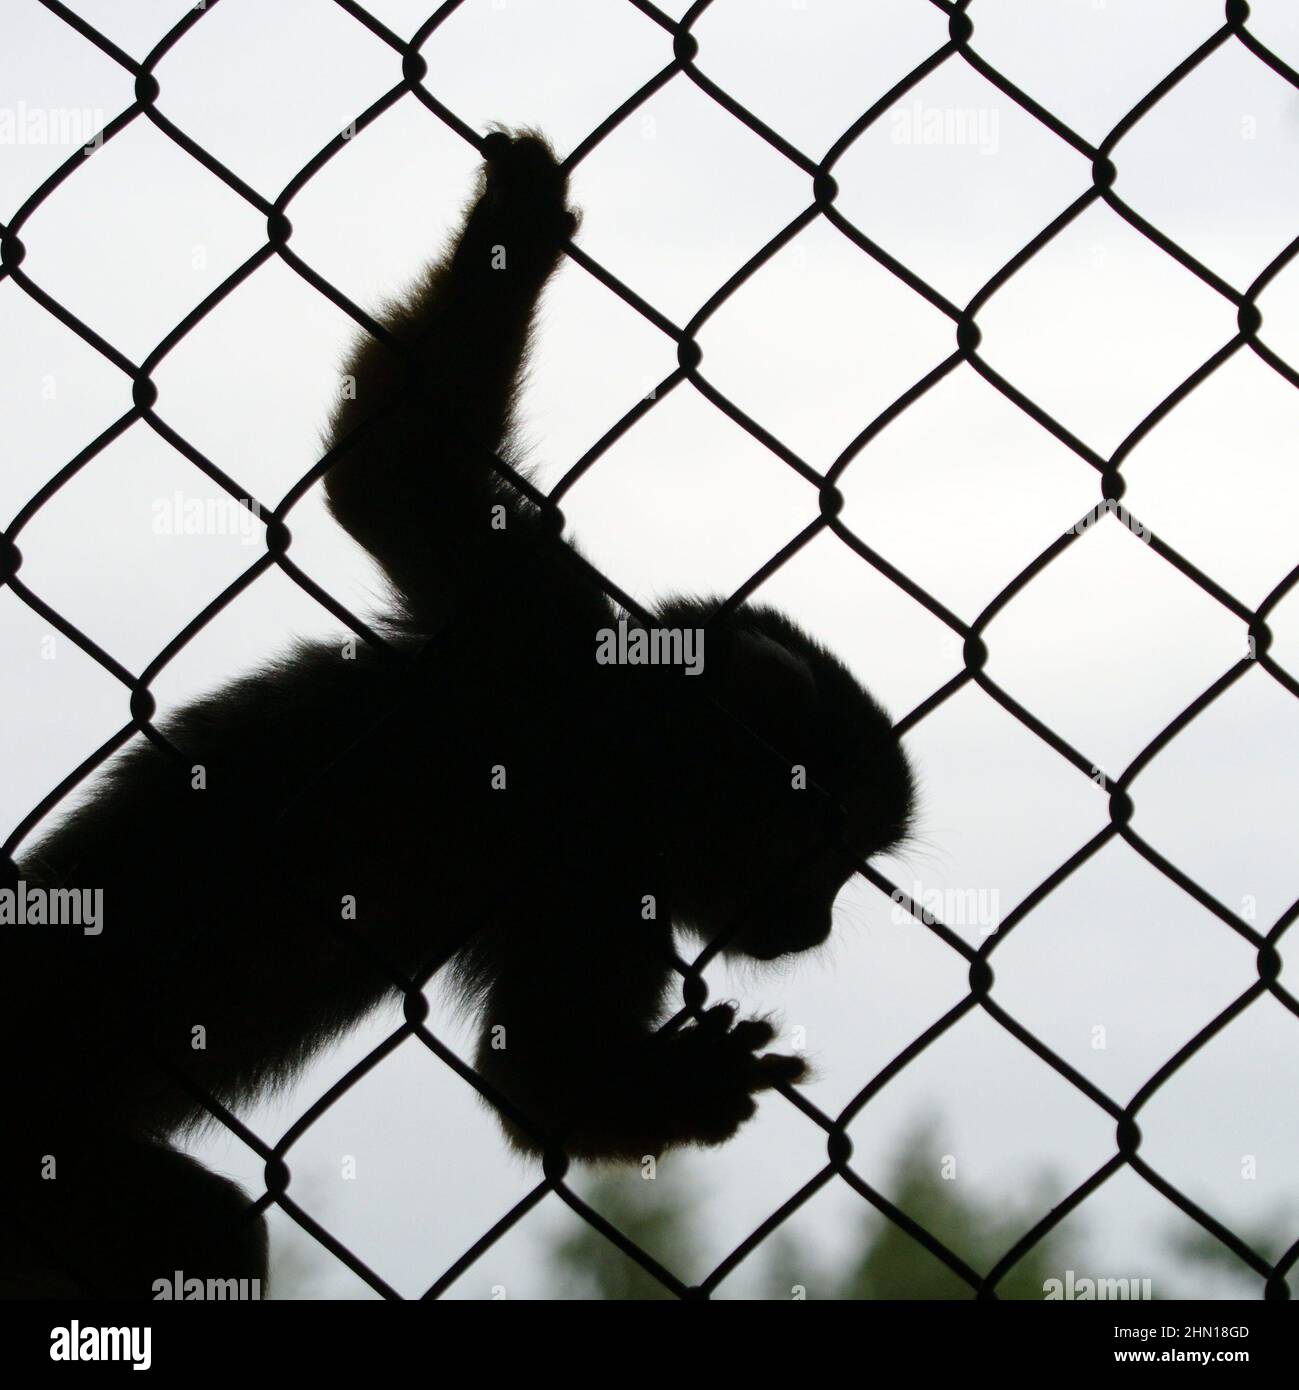 Monkey on fence silhouette Stock Photo